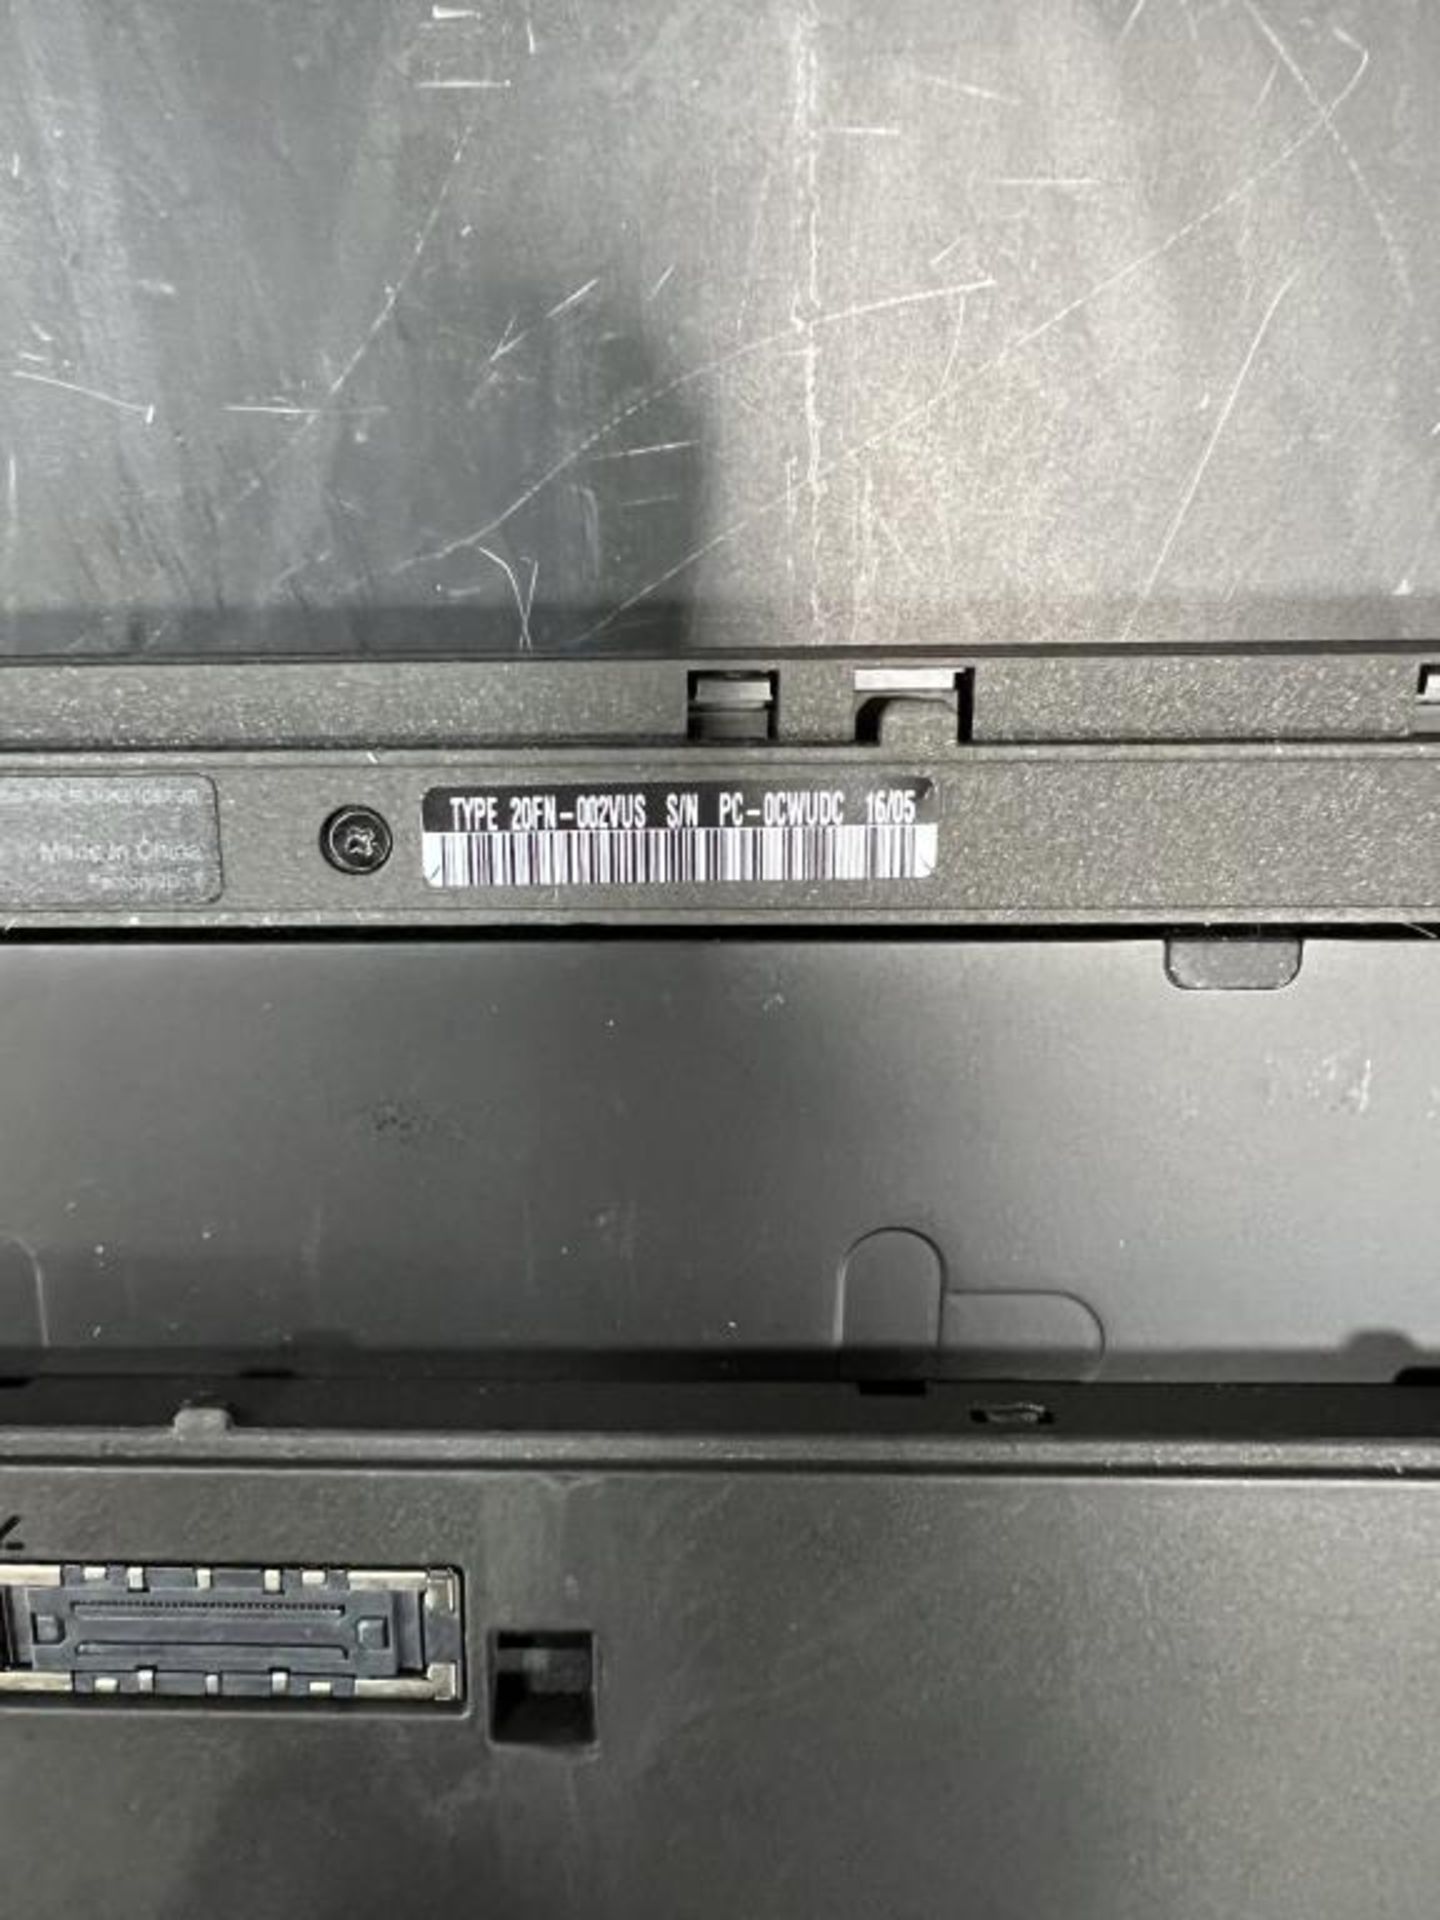 Lenovo T460 Laptop - Image 2 of 3